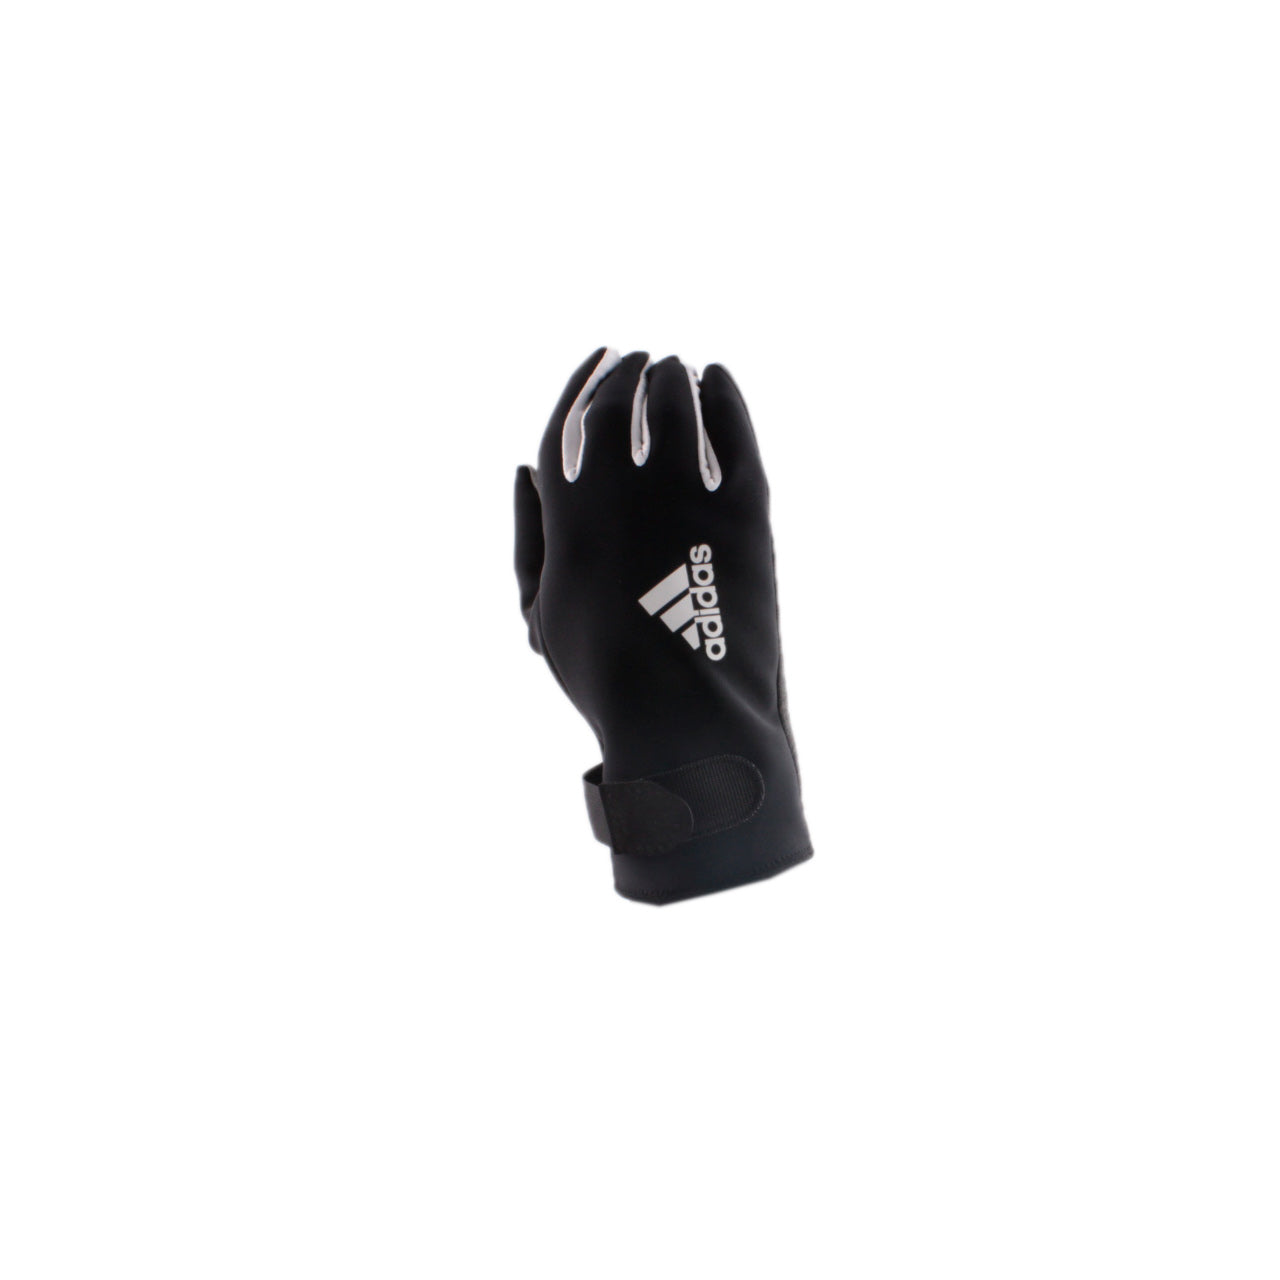 Adidas Cross V13 Handschuhe Glove X-Country Glove Biathlon Alkantara M65420 5